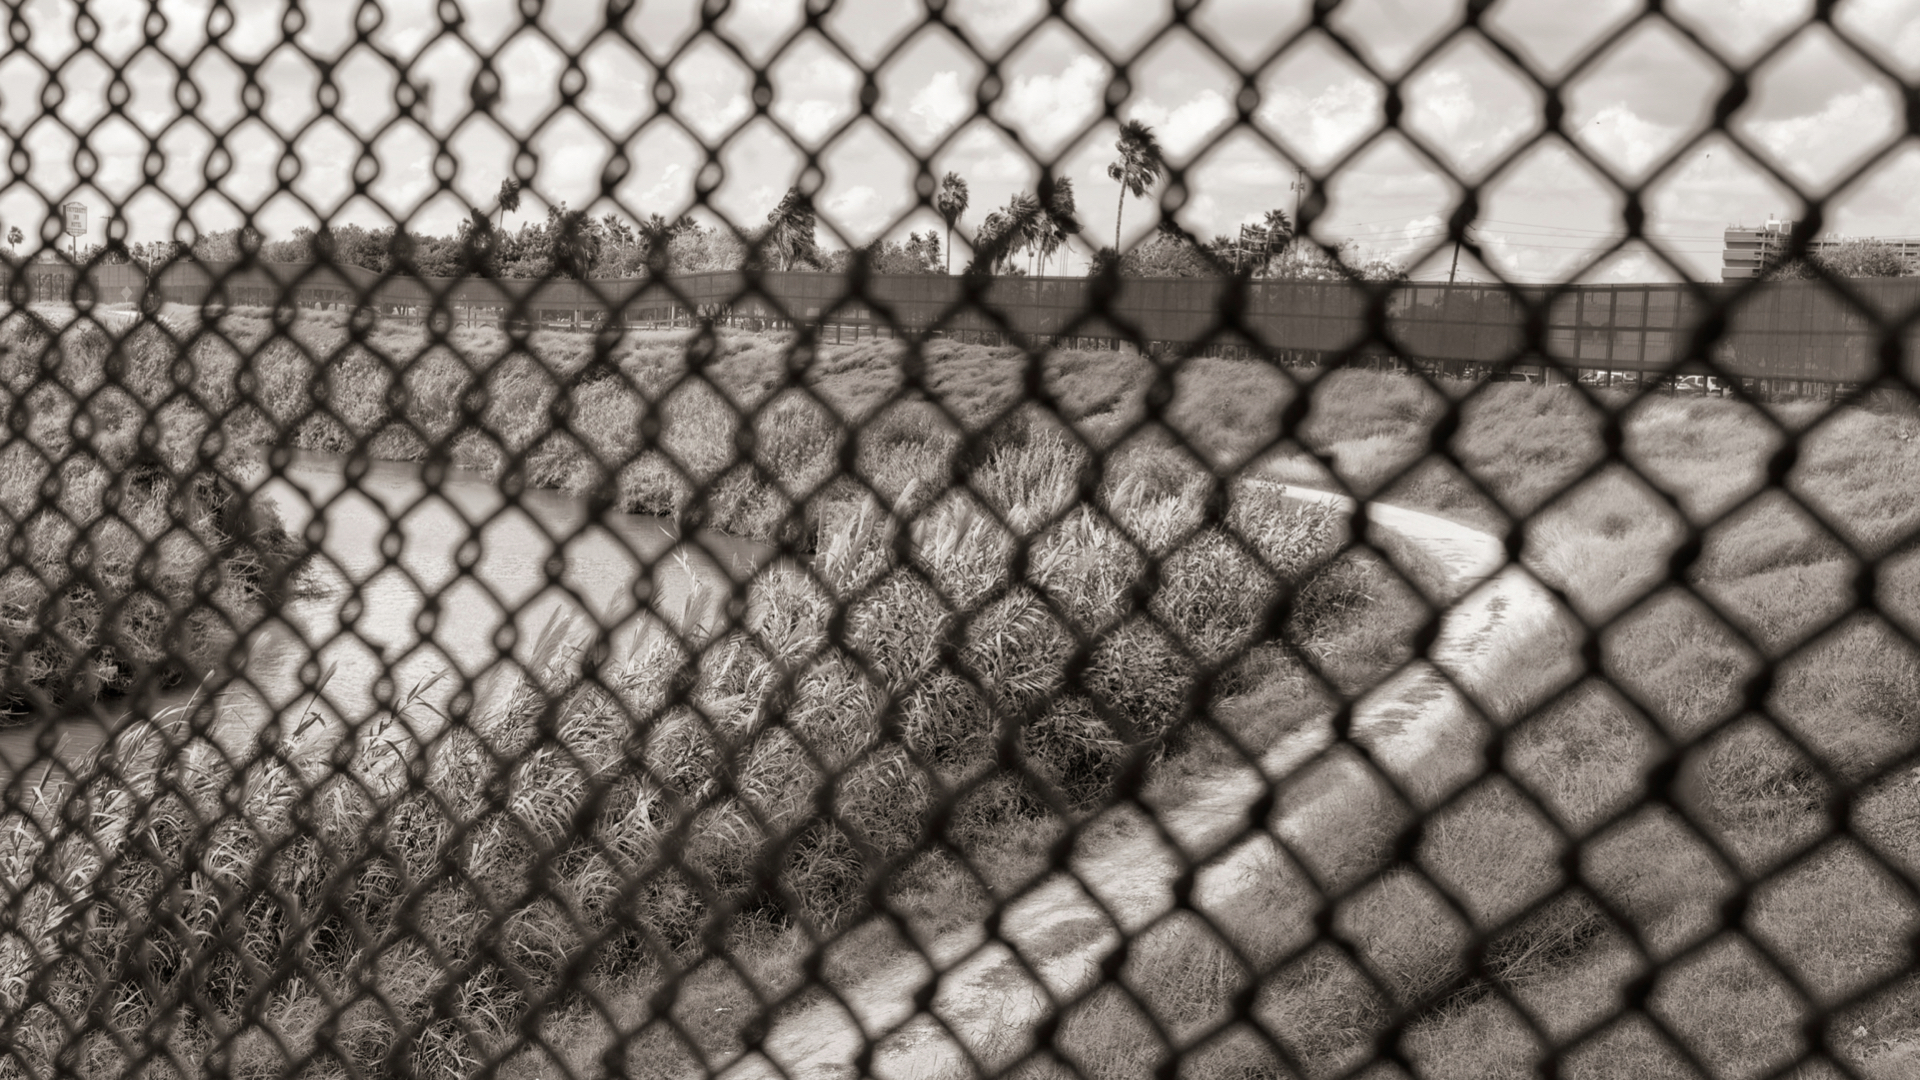 image4.fence and wall.jpeg